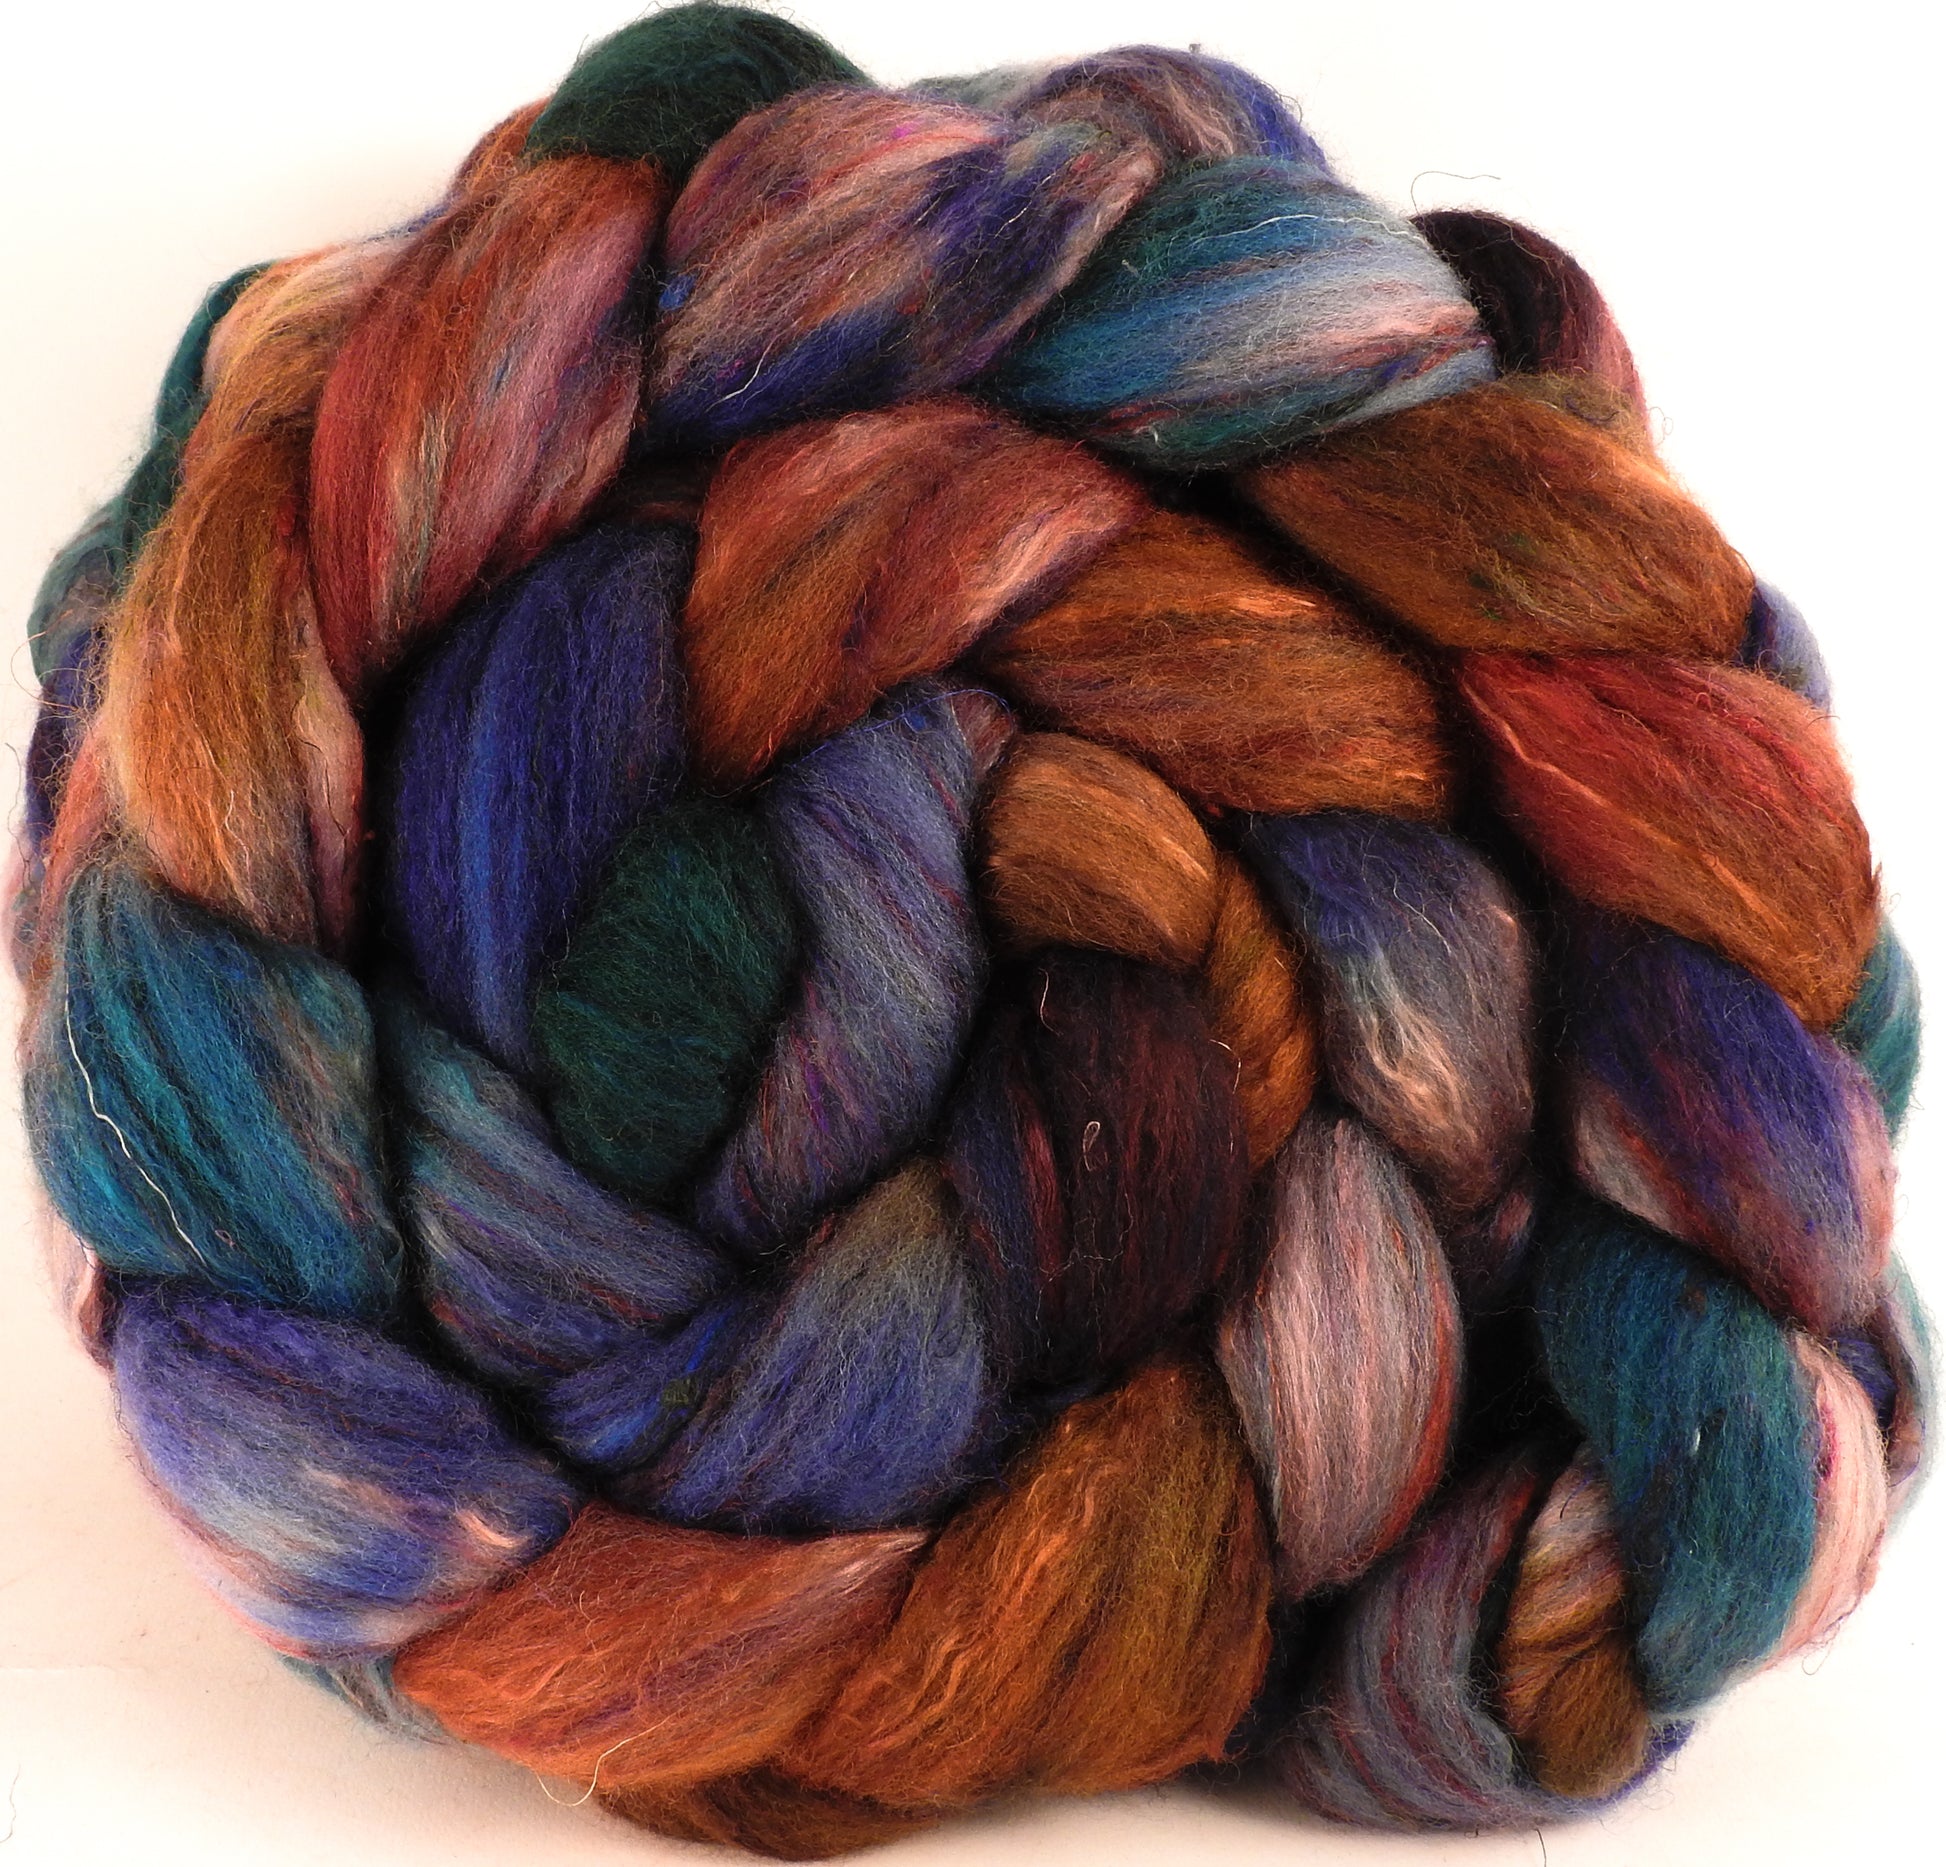 Batt in a Braid #39 - Argyle Socks (5.3 oz) - Falkland Merino/ Mulberry Silk / Sari Silk (50/25/25) - Inglenook Fibers